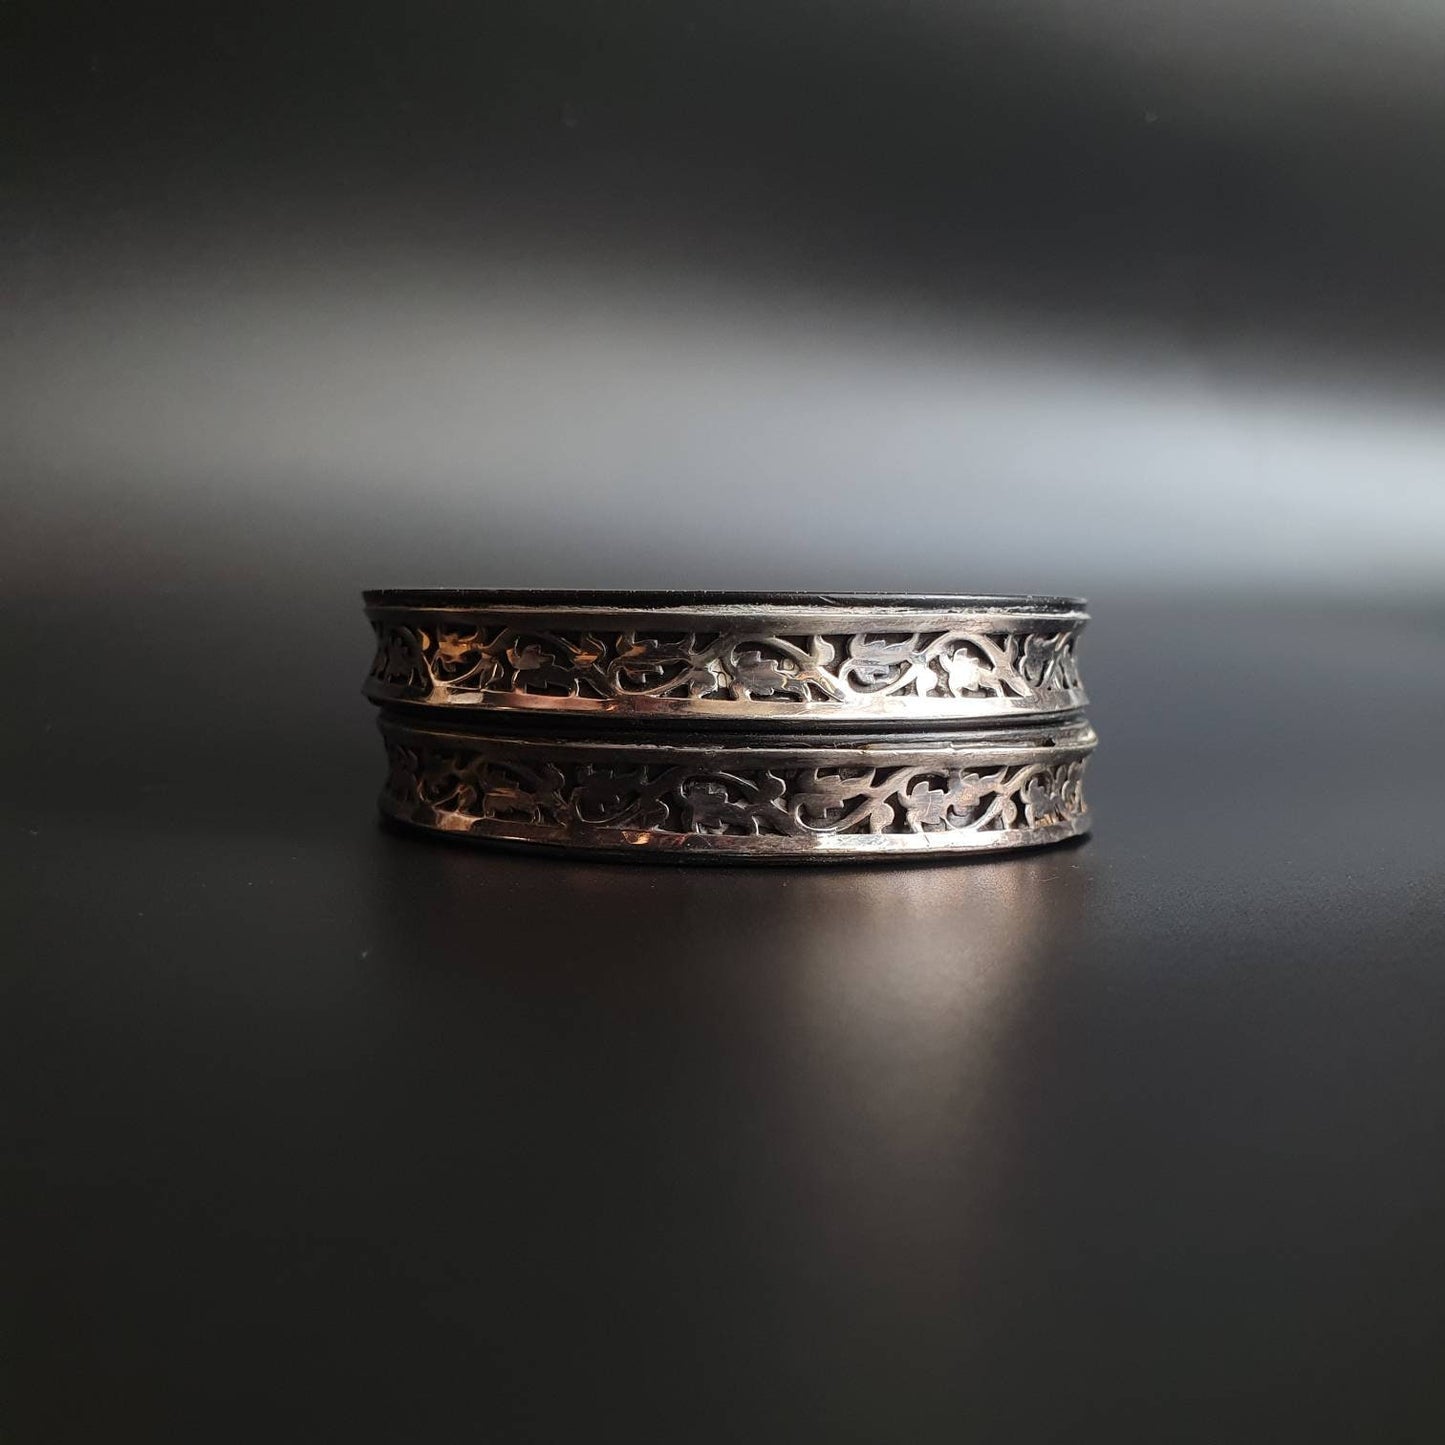 Bangles pair ebony bangles sterling silver filigree handmade unique style jewellery artisan vintage silver